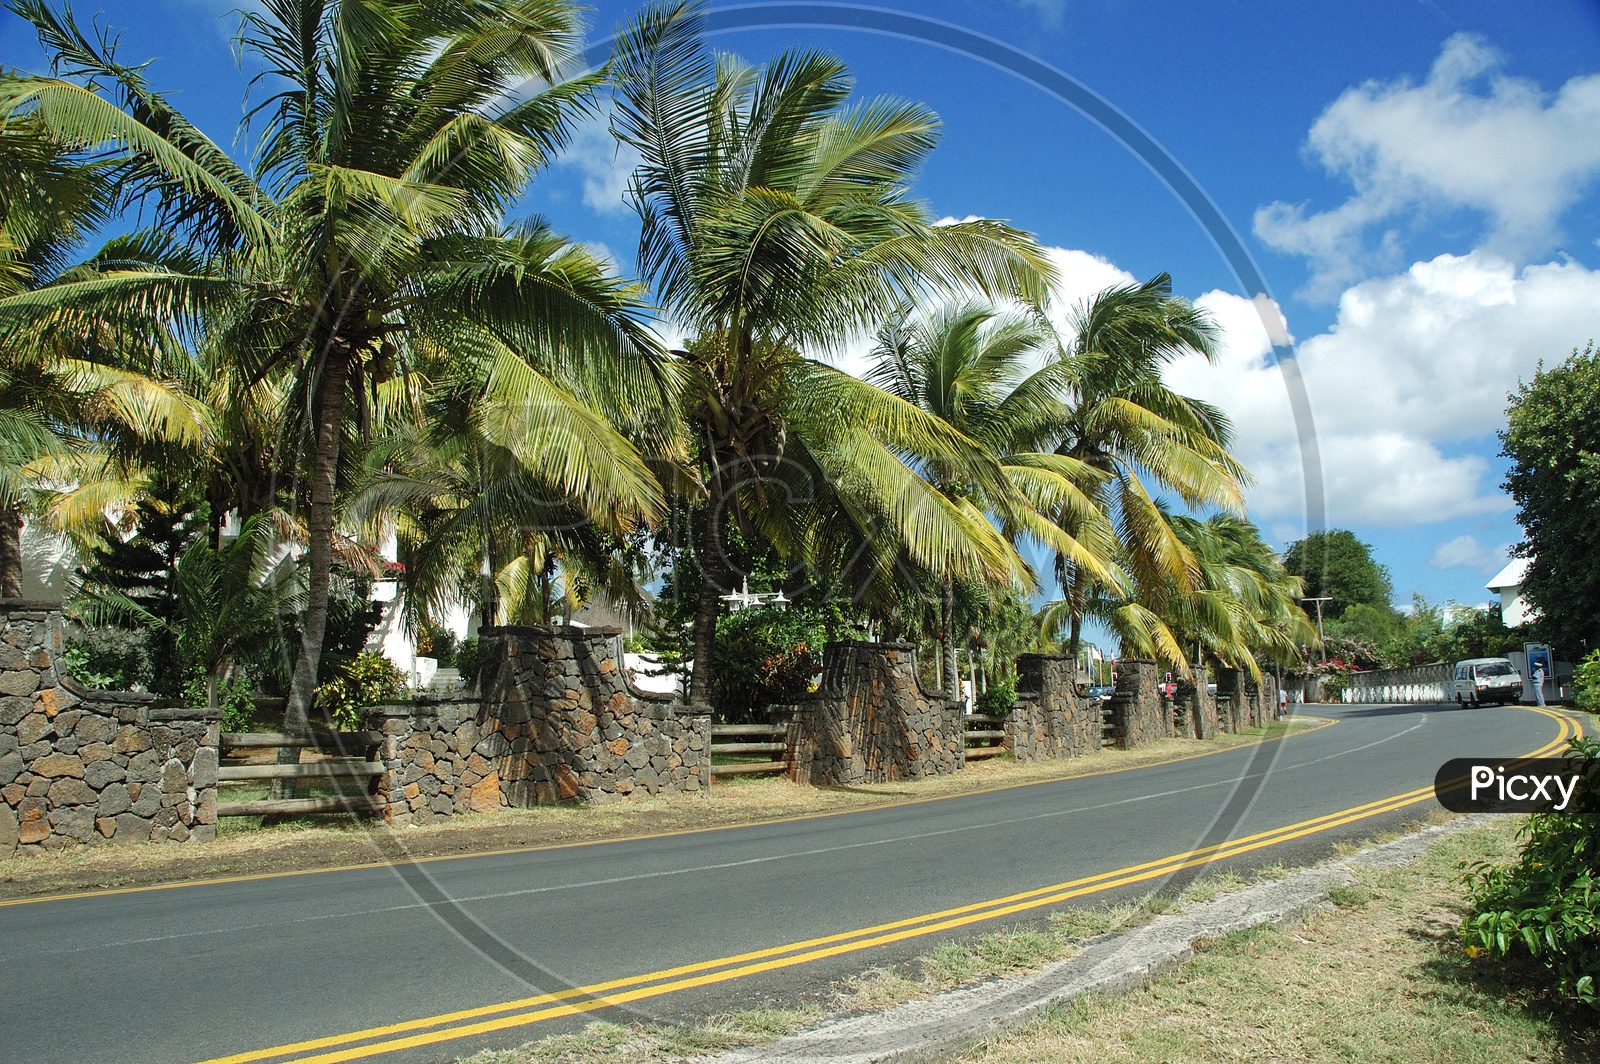 Coconut trees alongside the road